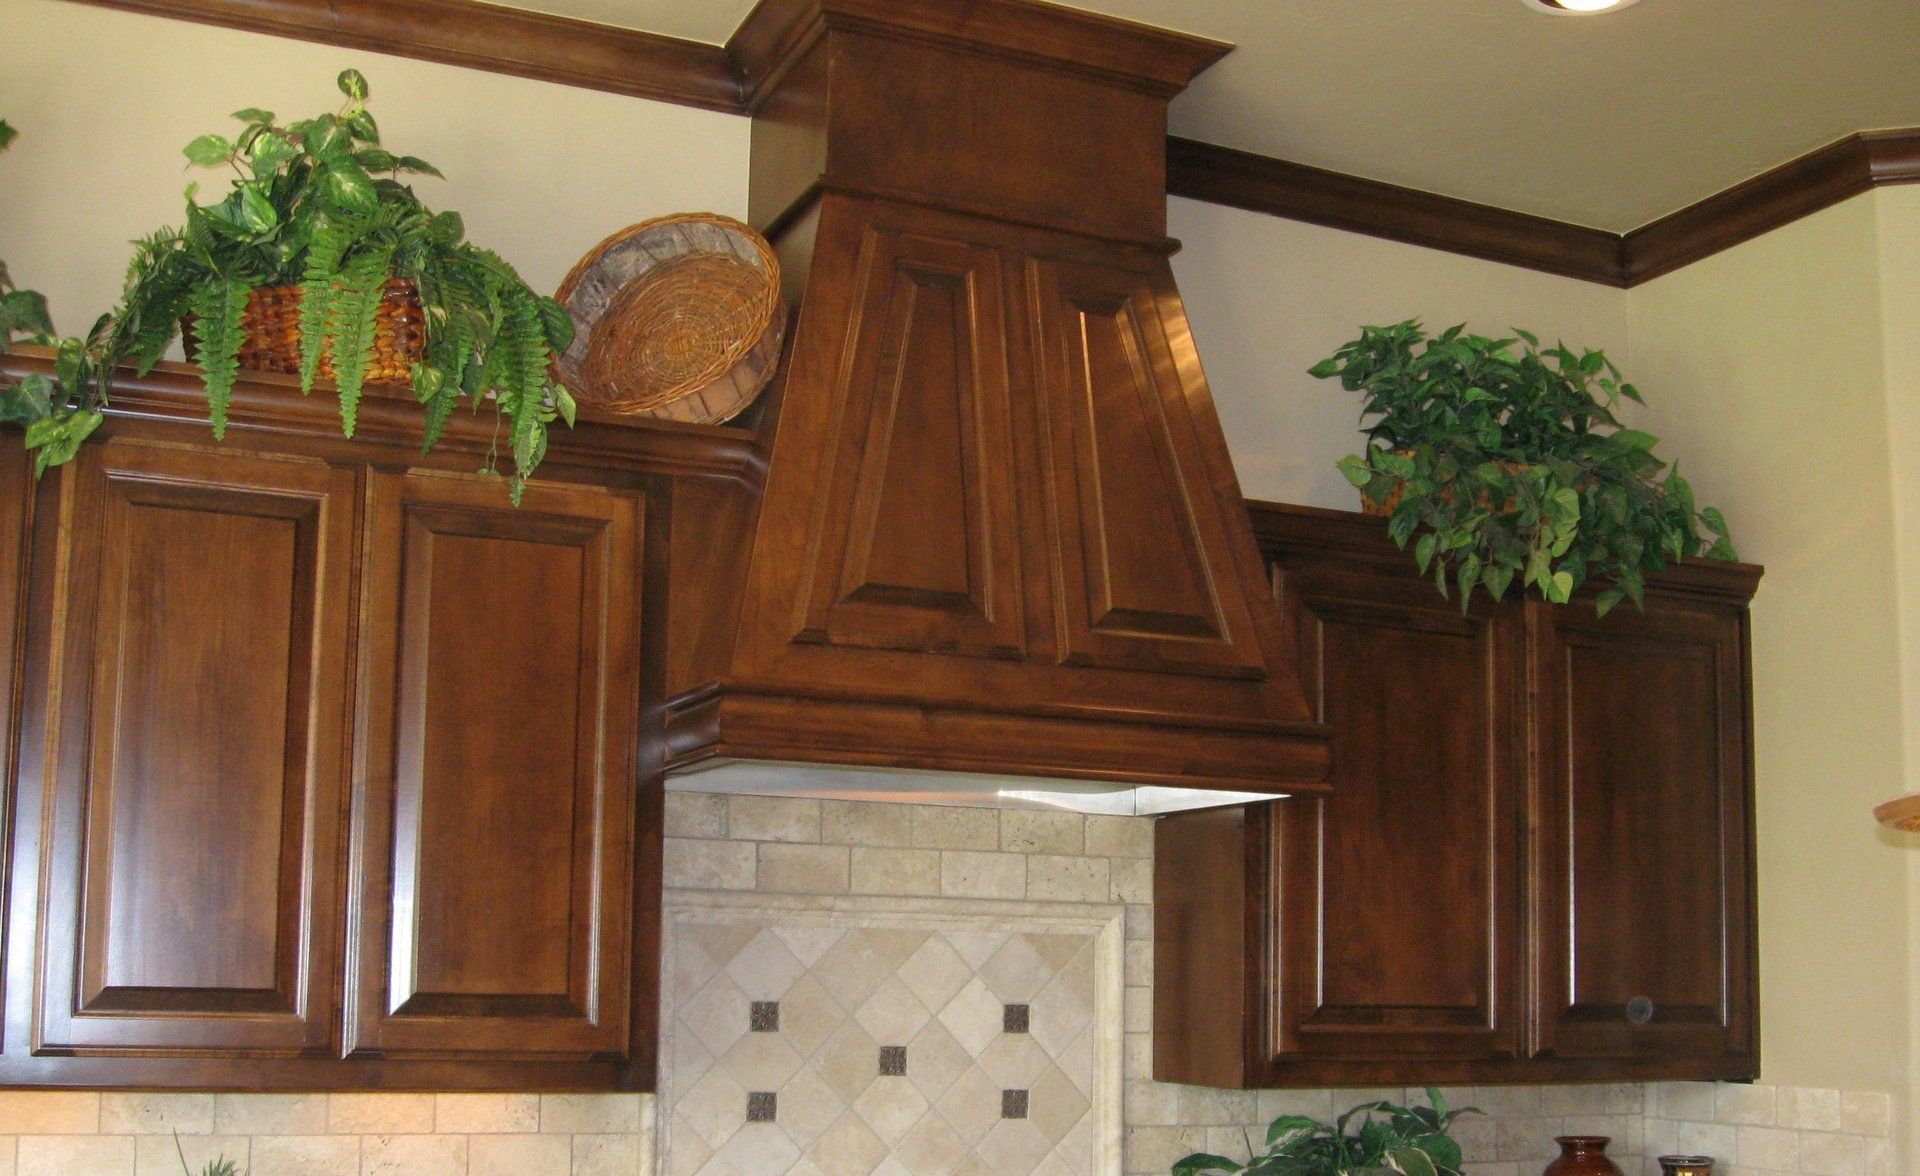 Specialty Cabinets - Custom Wood LLC